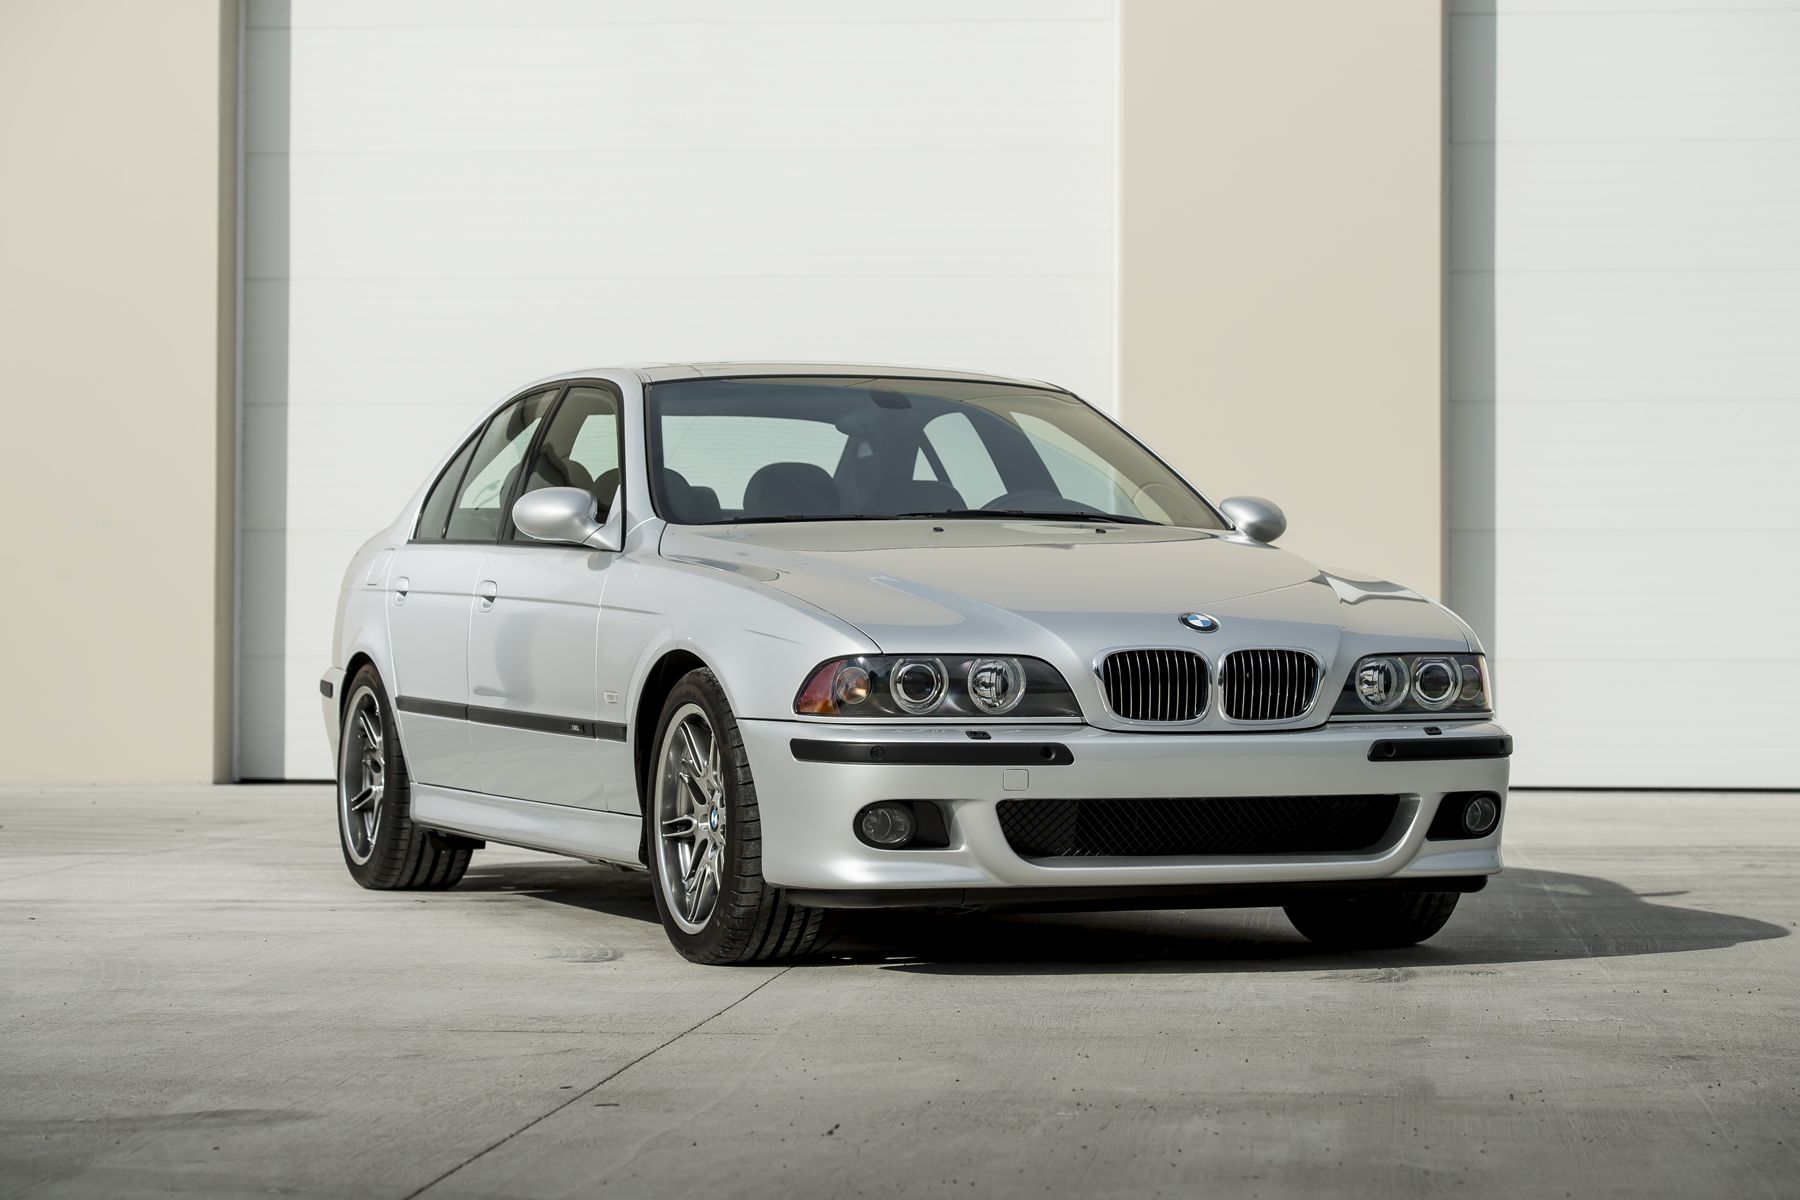 BMW M5 E39 2002 for sale at ERclassics